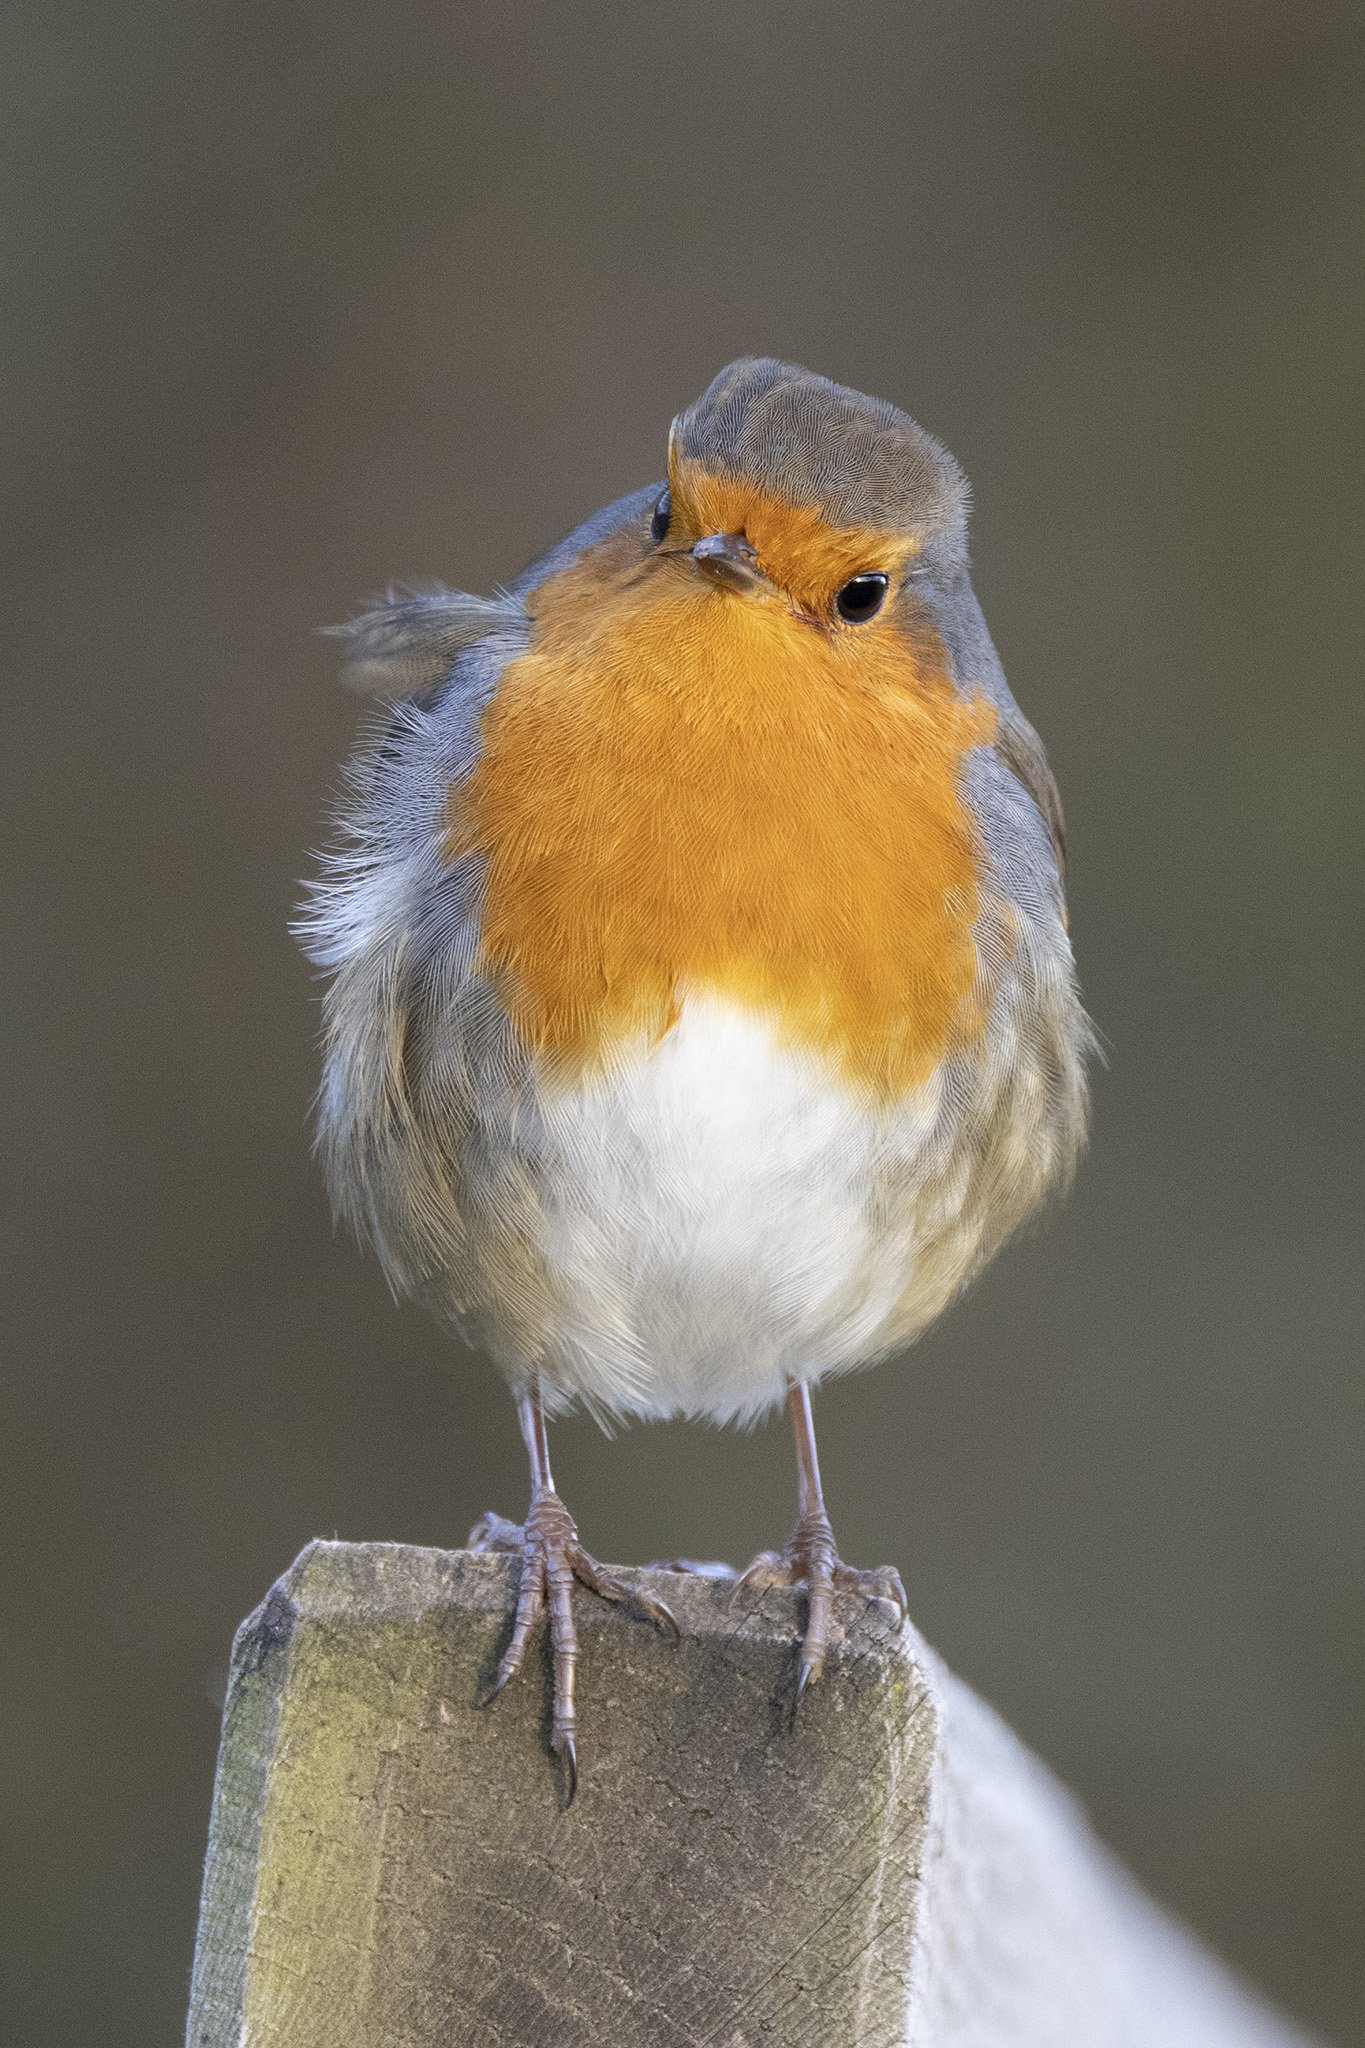 A very friendly little robin